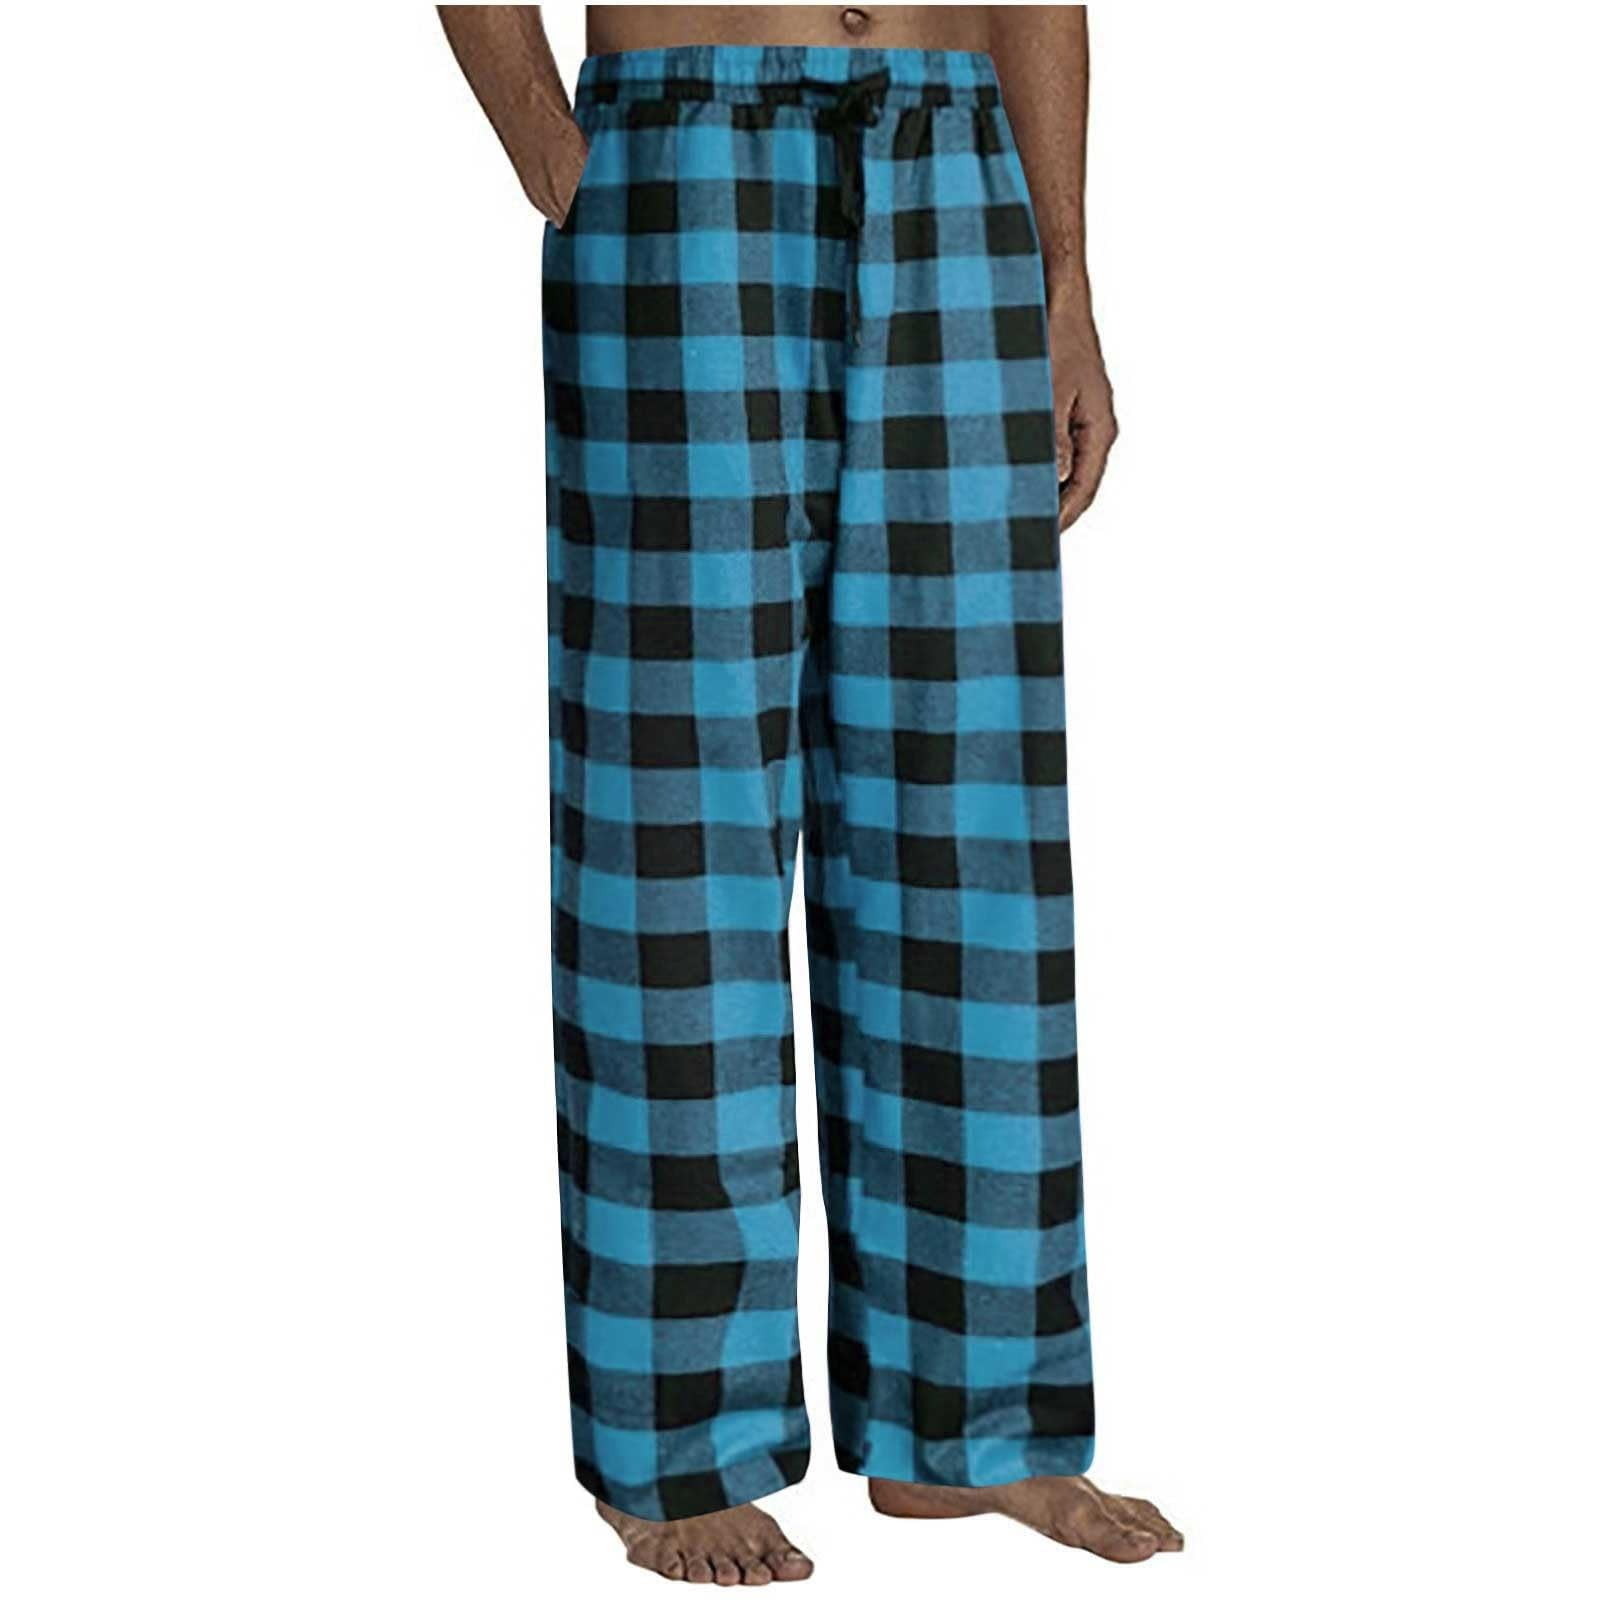 Ovticza Soft Fleece Men's Plaid Pajama Pants with Pockets Dark Green 2XL 